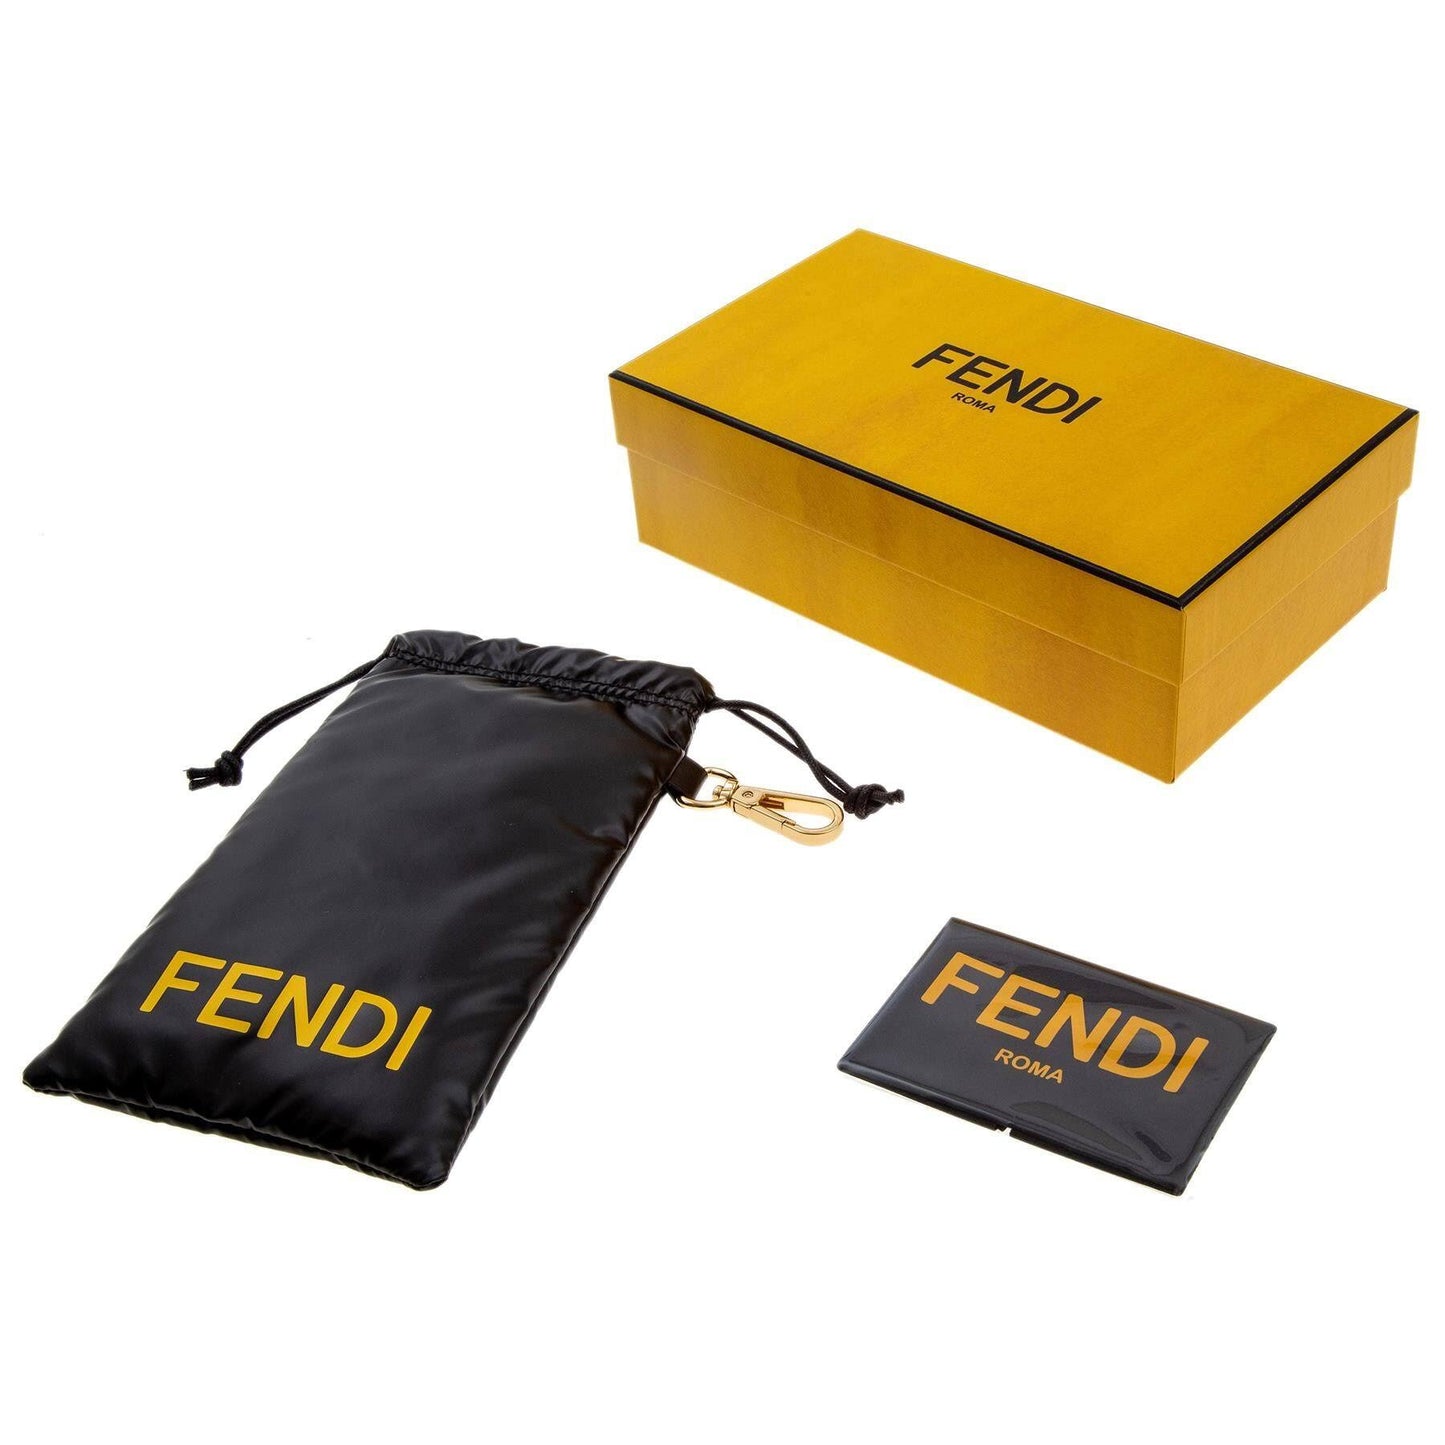 Fendi FE50028I-052-53  New Eyeglasses